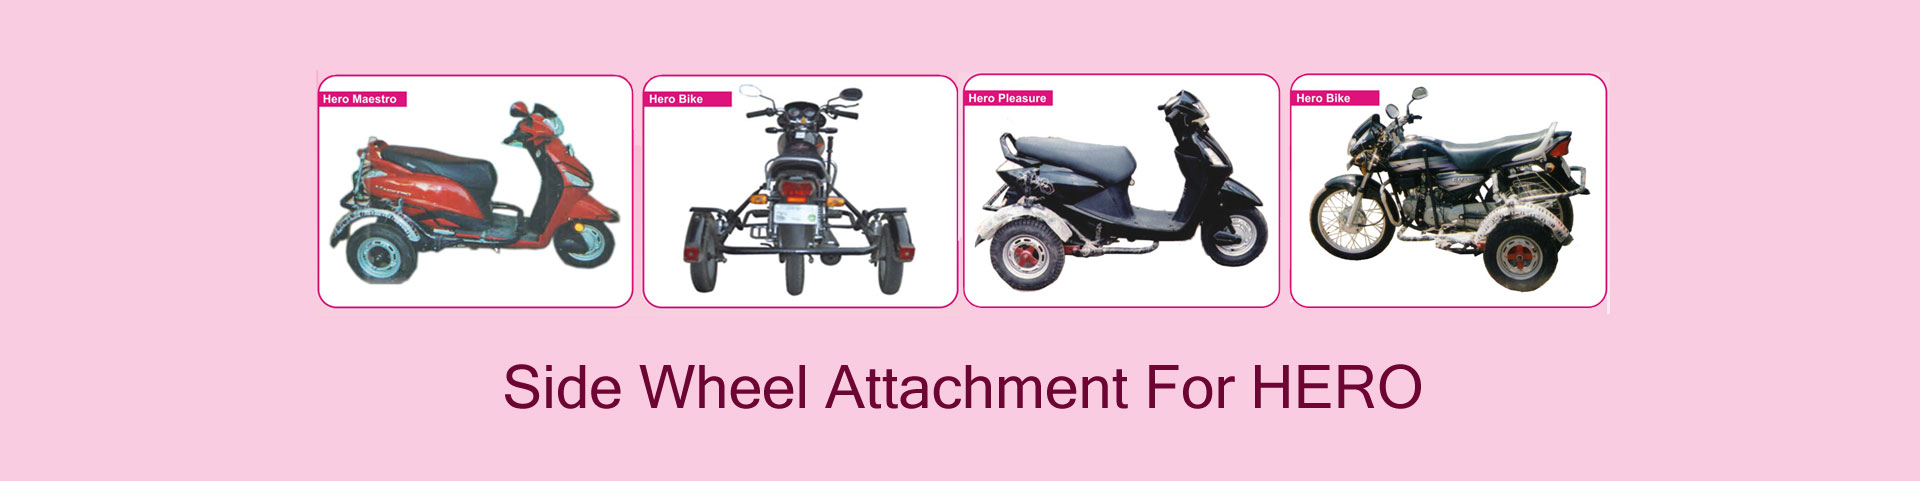 side wheel attachment for bike